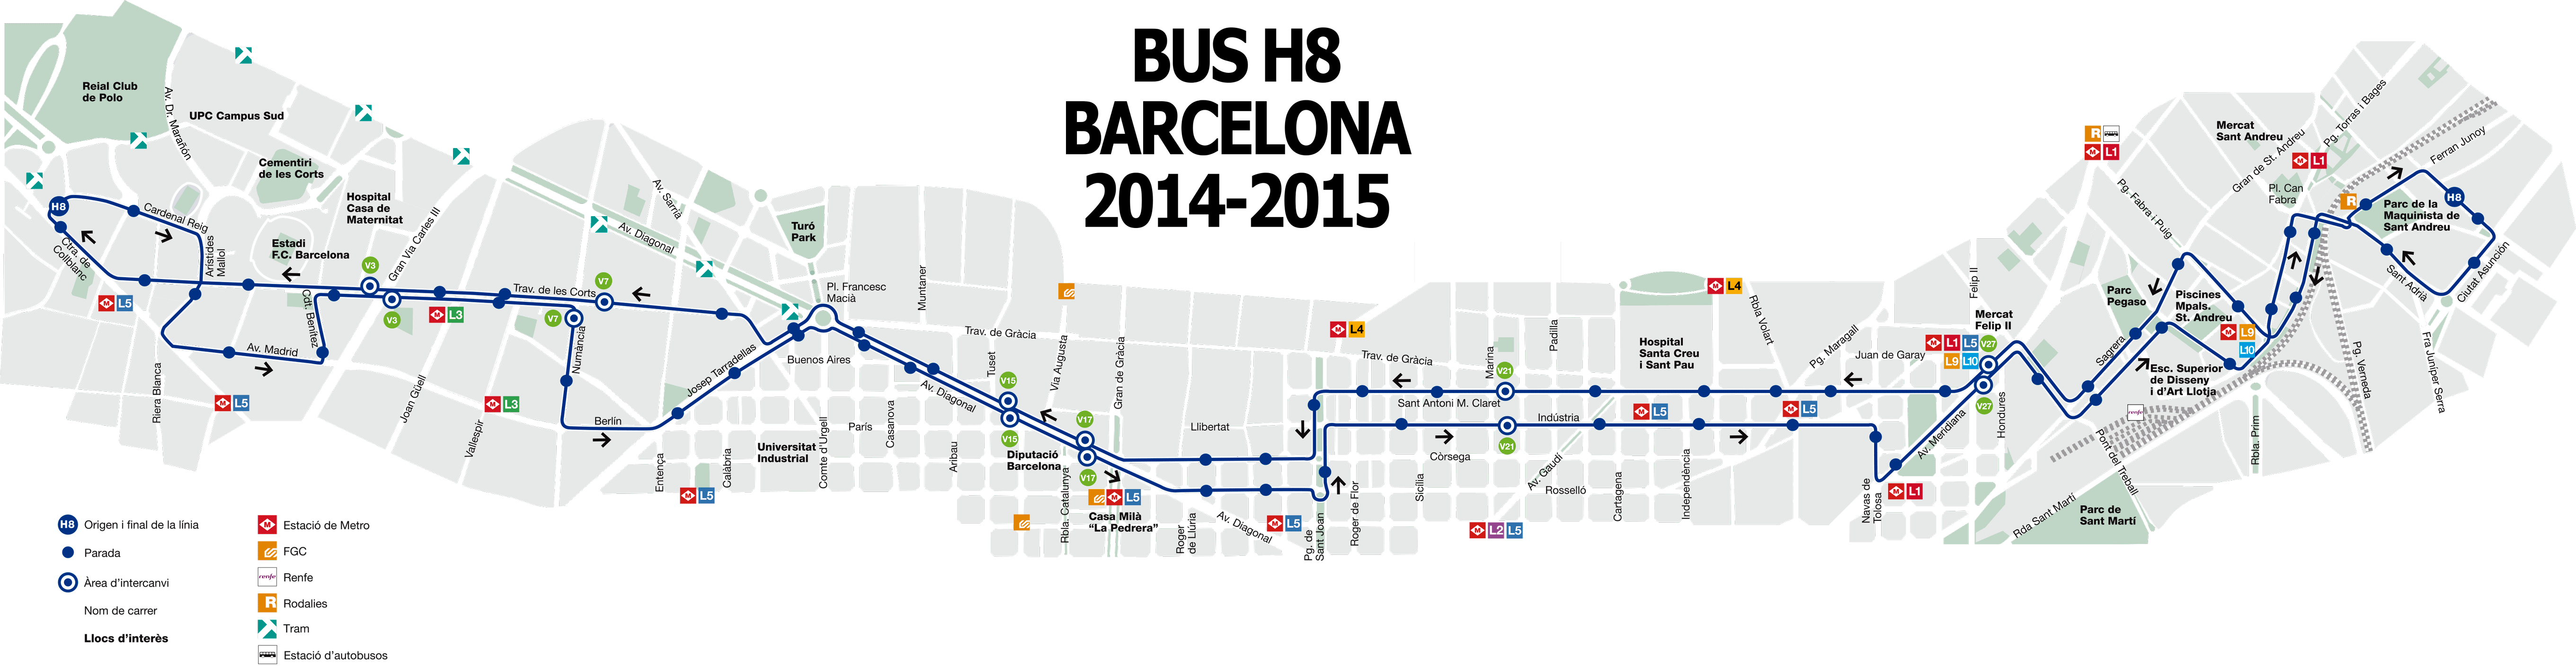 Barcelona bus map line H8 2014